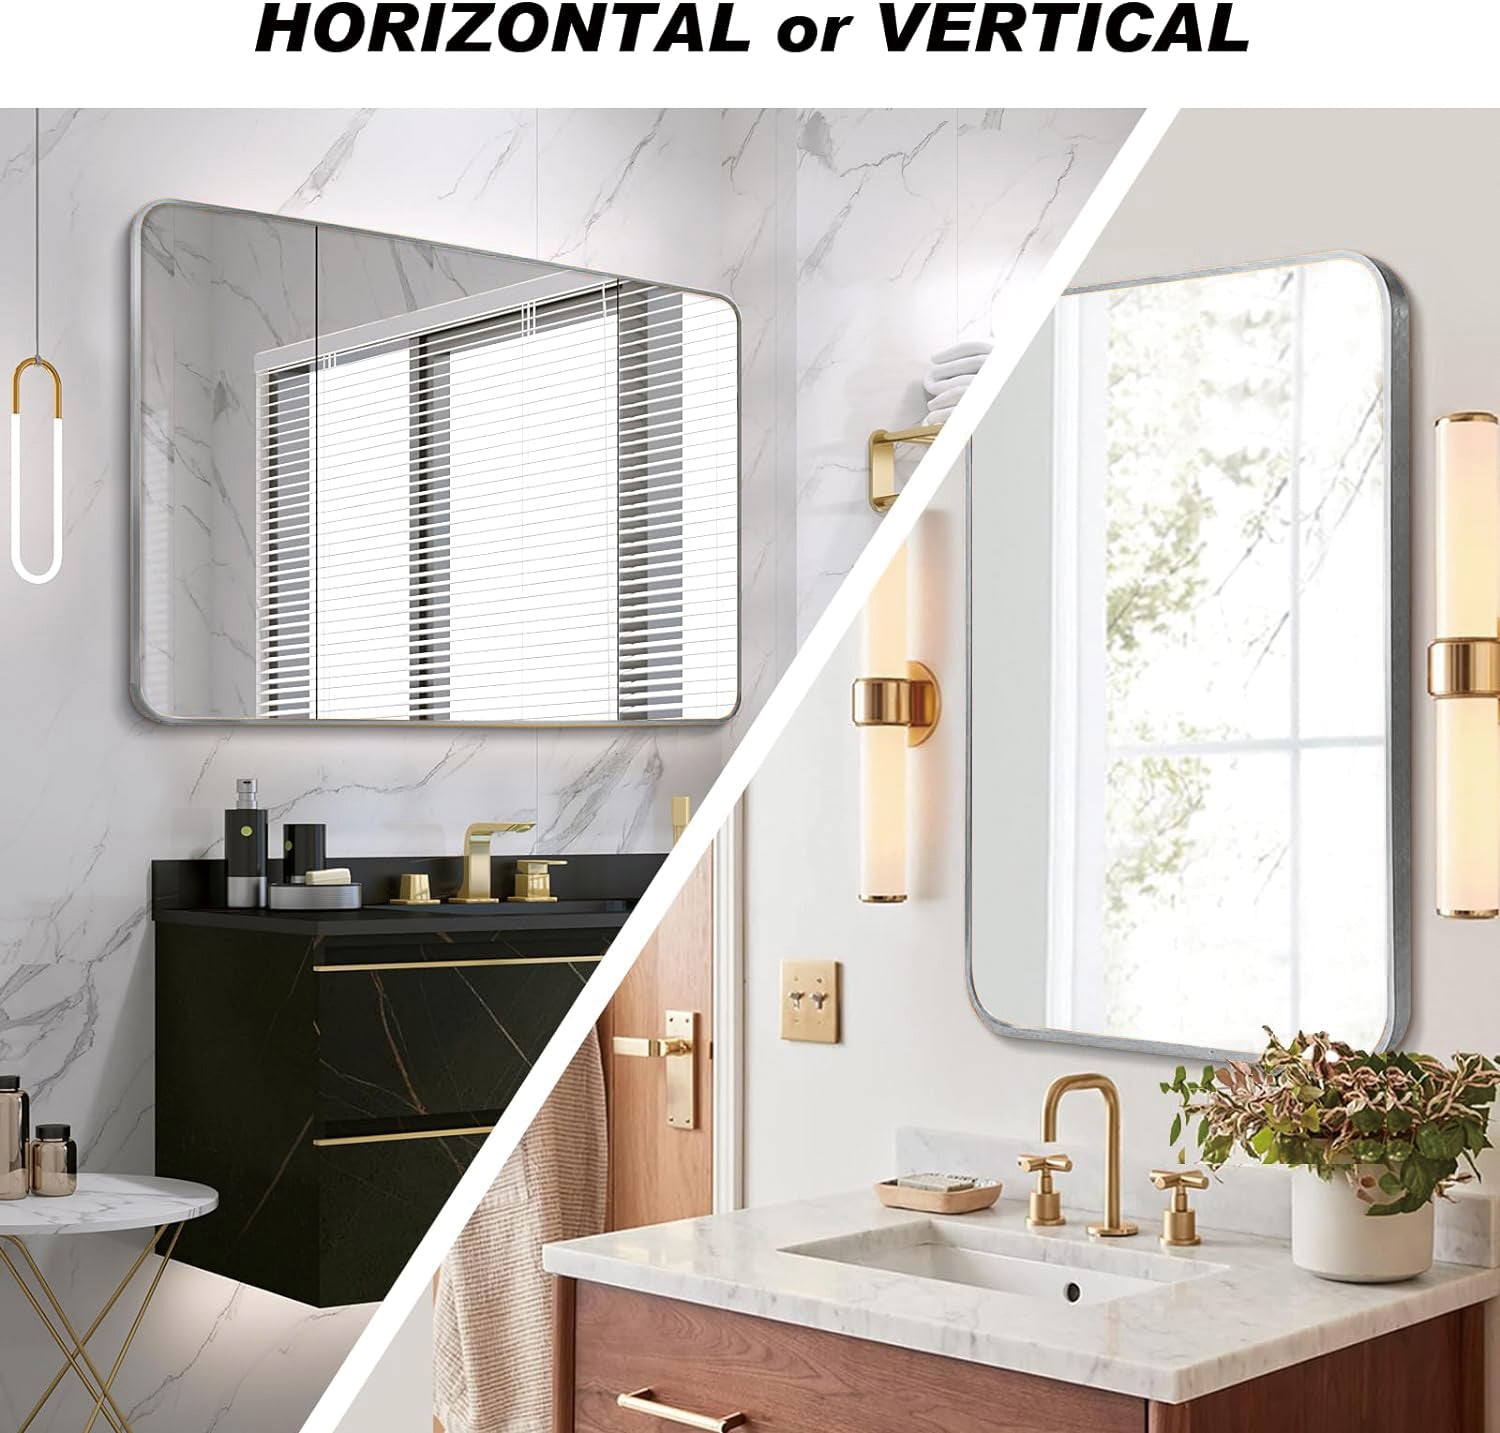 SIlver 30 "x40" Rectangular Bathroom Wall Mirror black-classic-modern-mdf+glass-aluminium